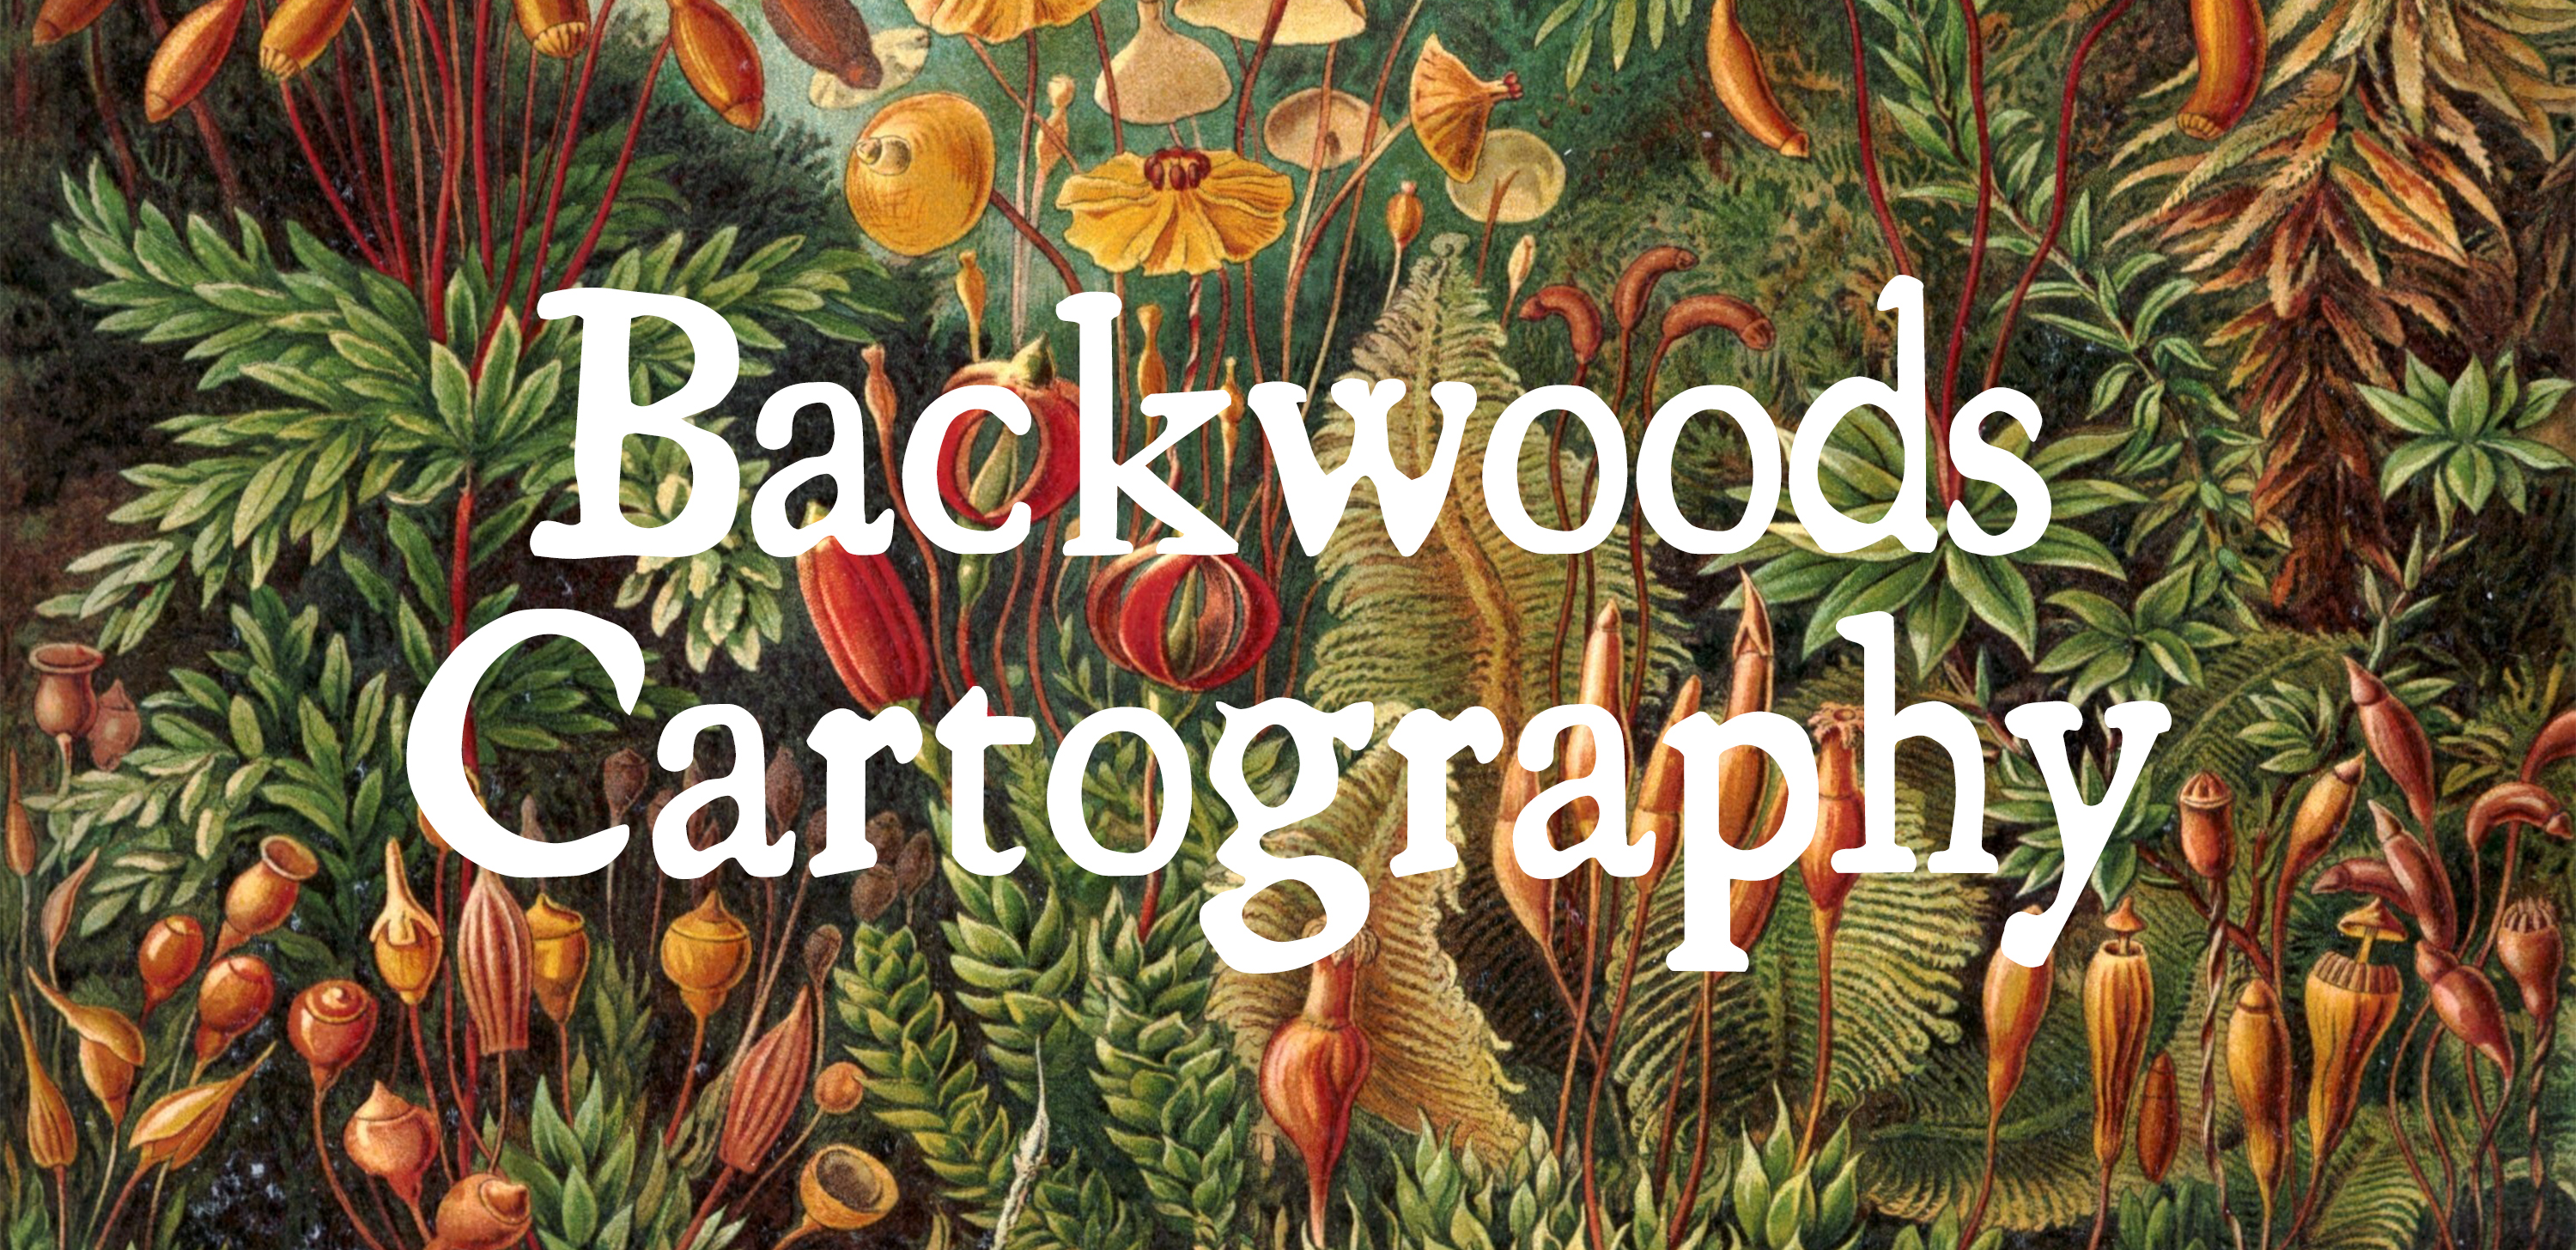 Backwoods Cartography